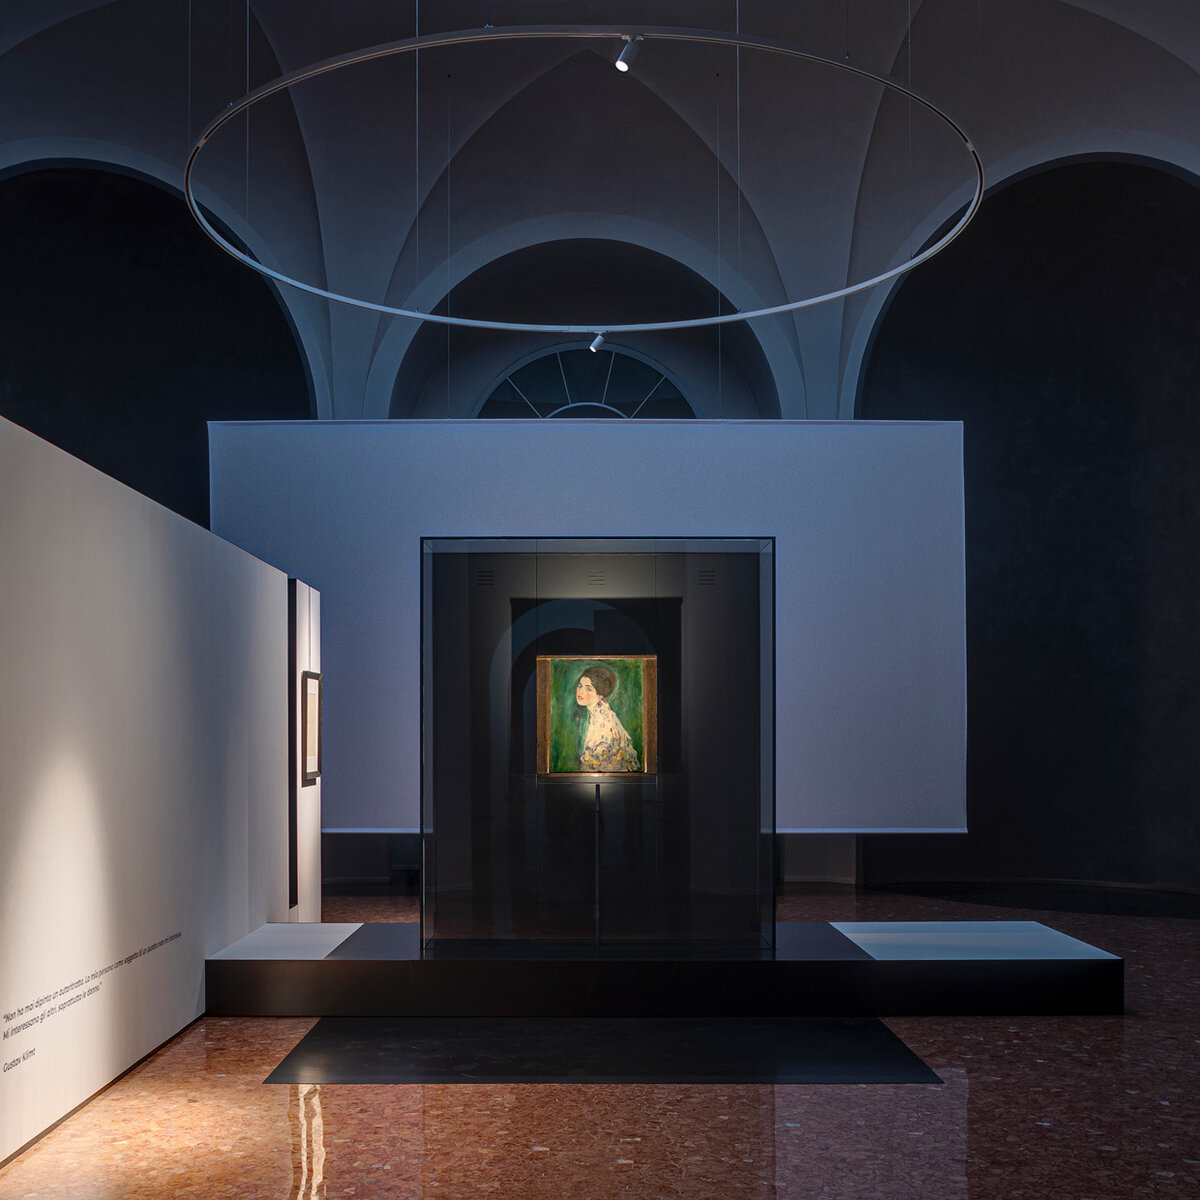 Klimt alla Galleria d'arte Ricci Oddi | © Davide Groppi srl | All Rights Reserved